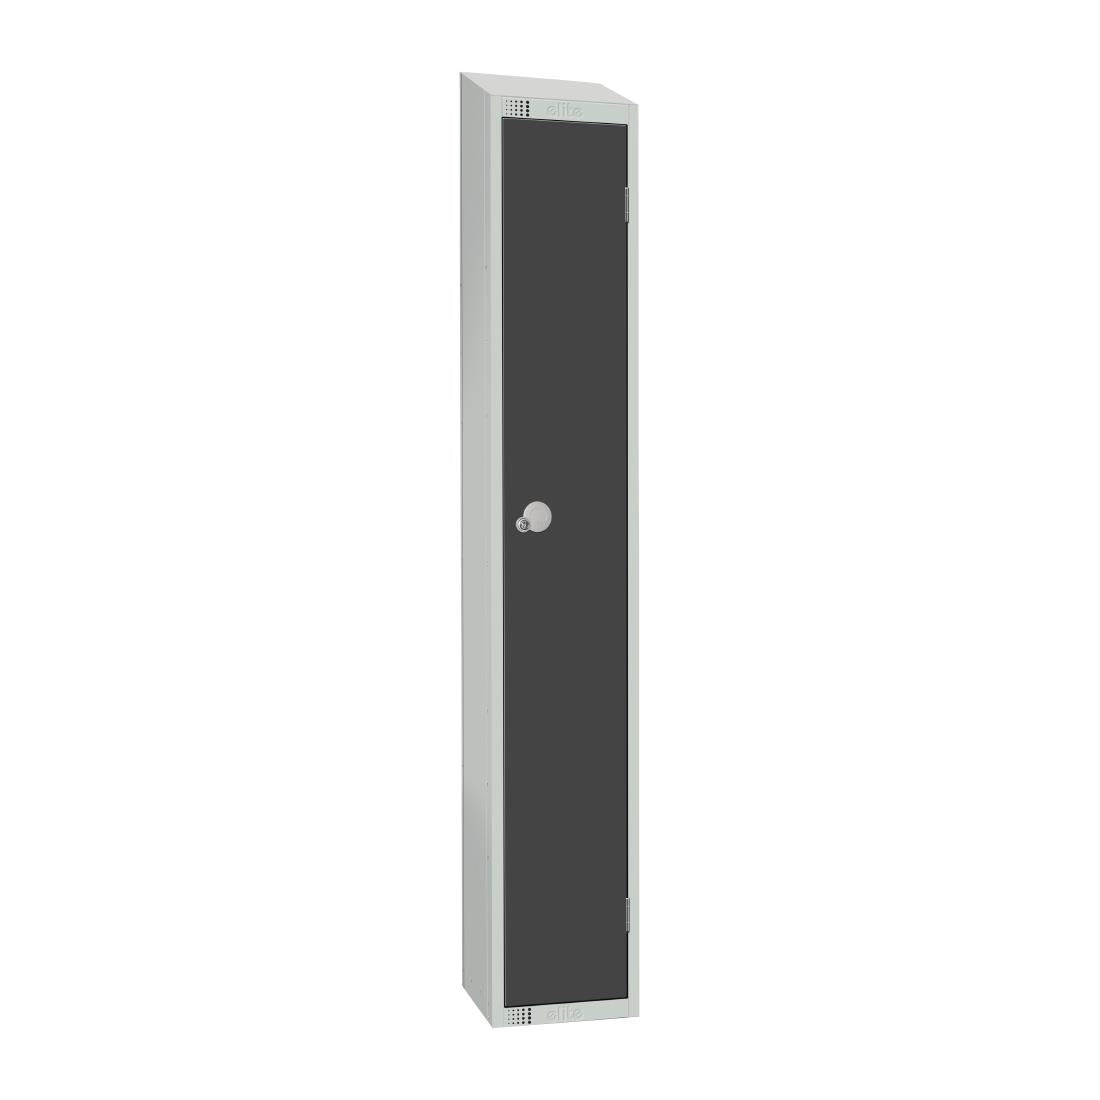 GR677-ELS Elite Single Door Electronic Combination Locker with Sloping Top Graphite Grey JD Catering Equipment Solutions Ltd